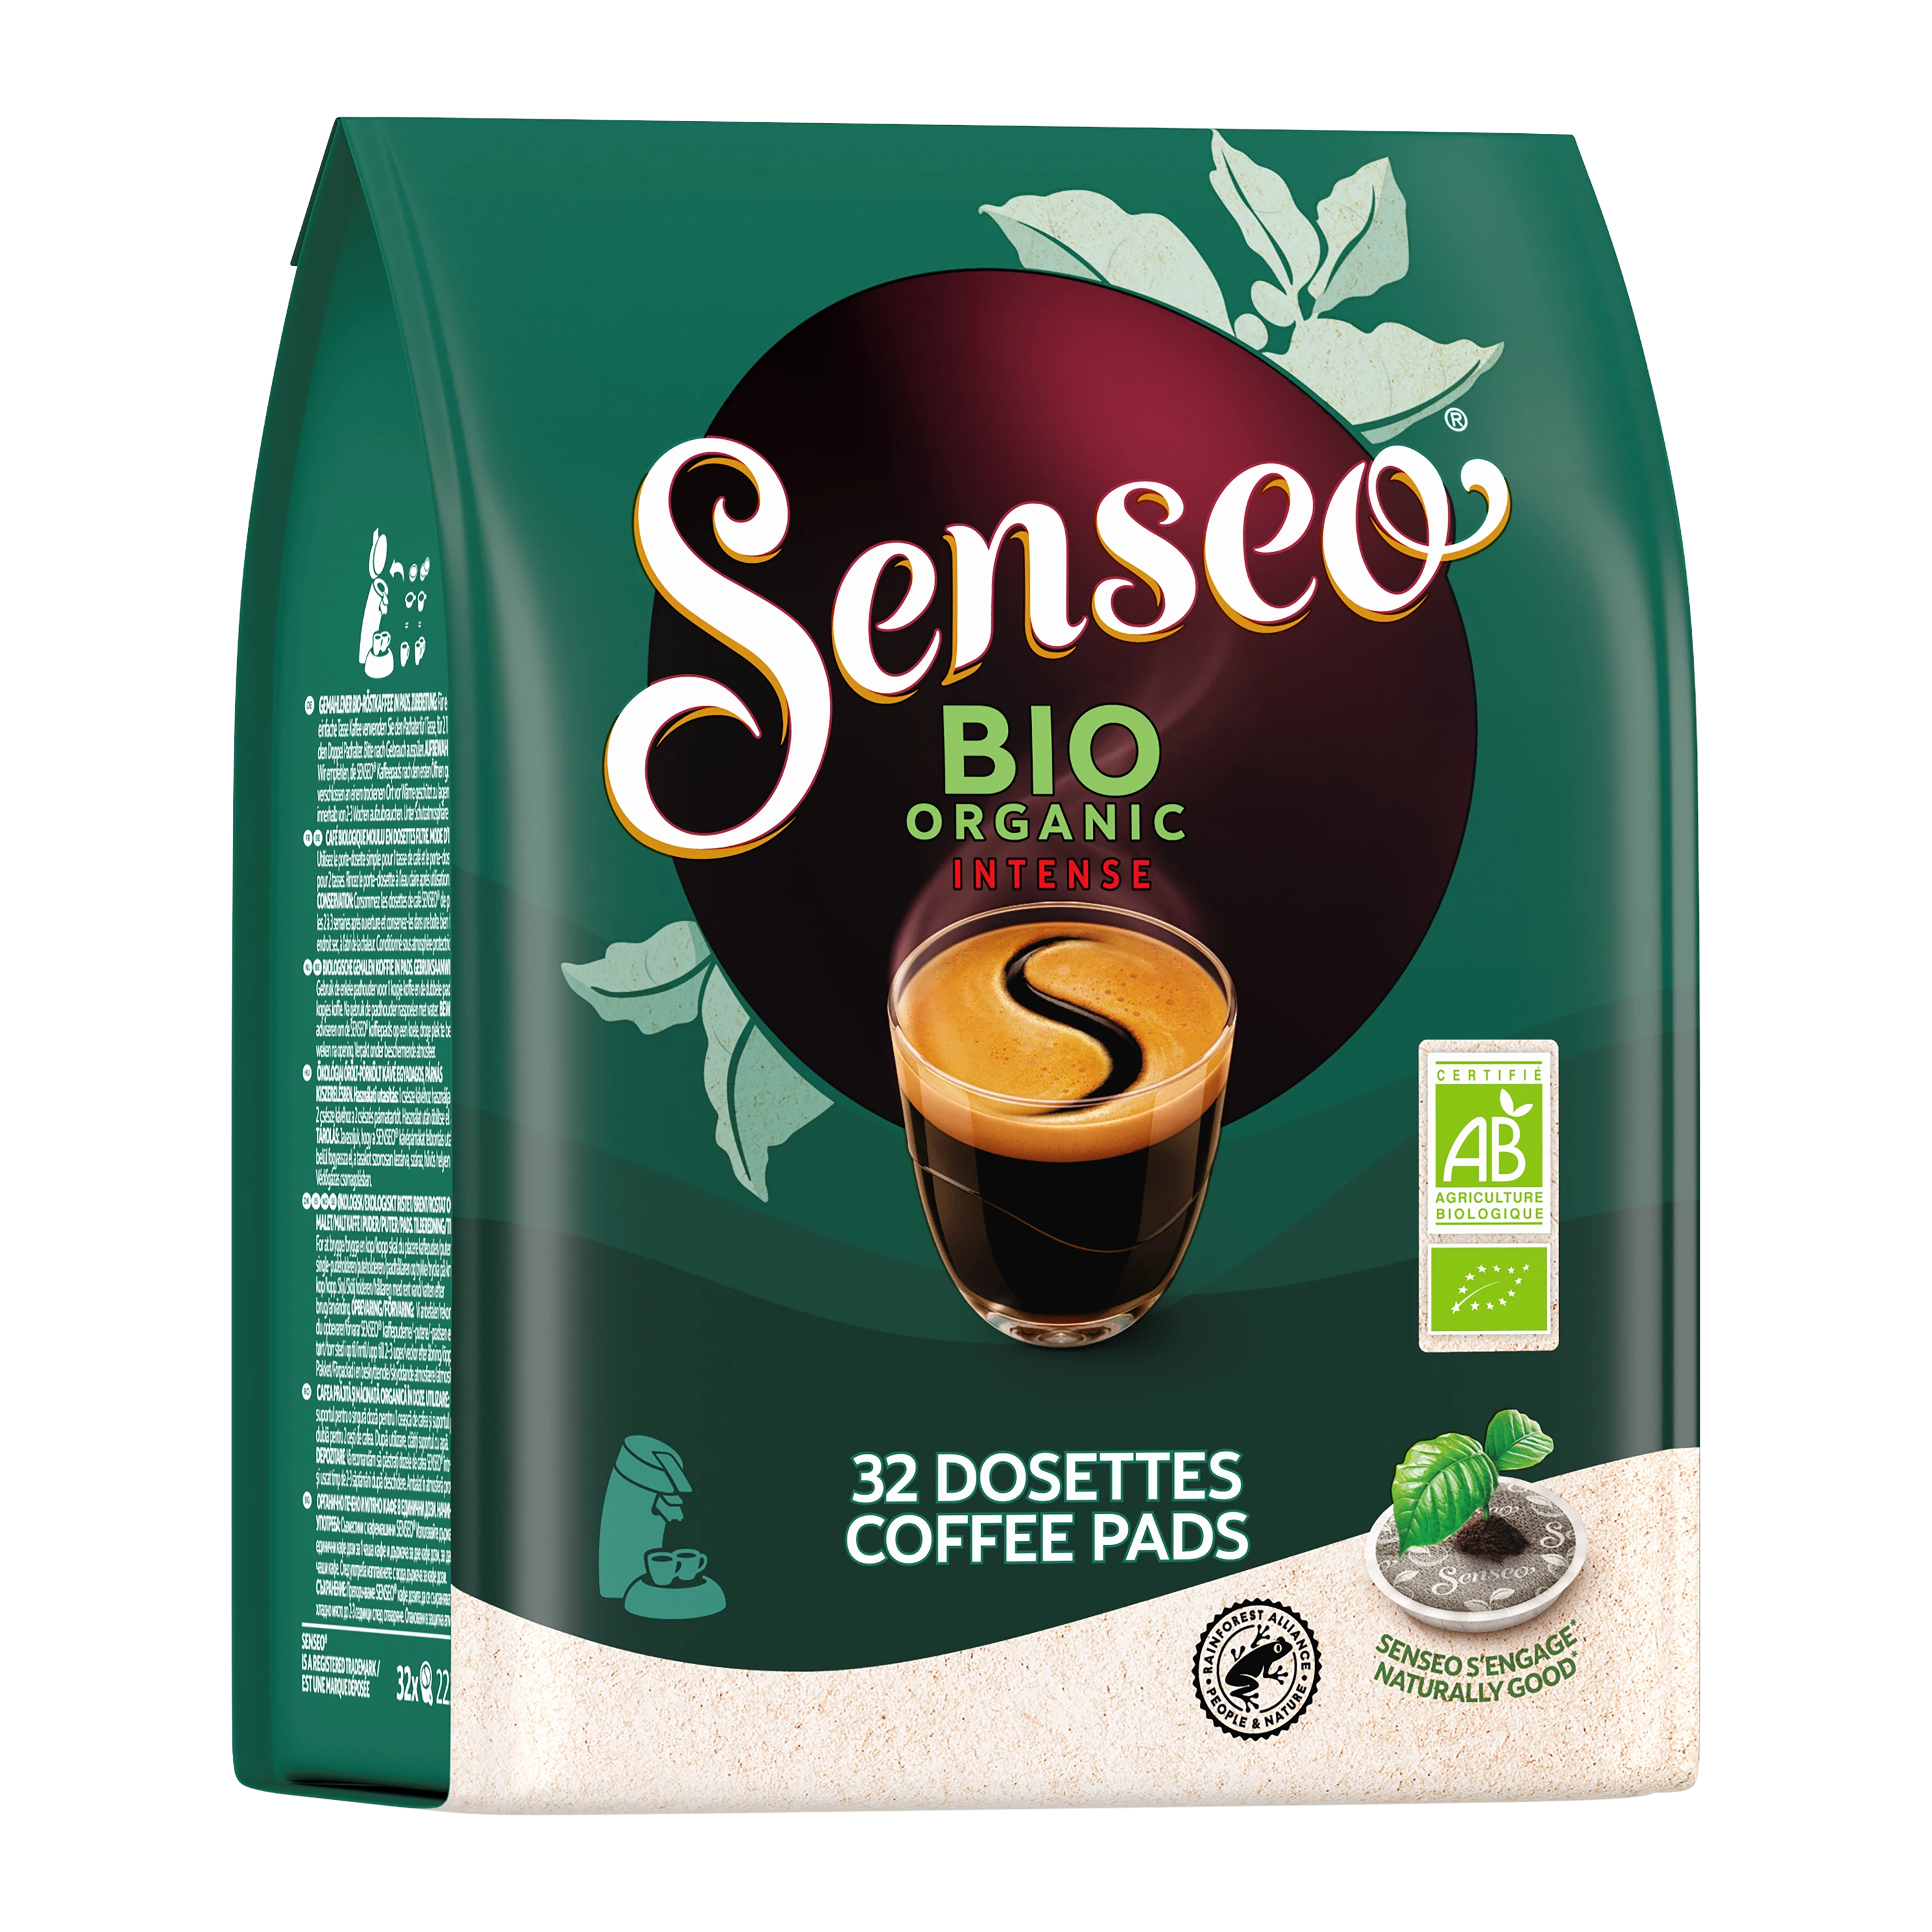 Senseo Espresso Intense N°9 - 36 dosettes Compact - Café Dosette